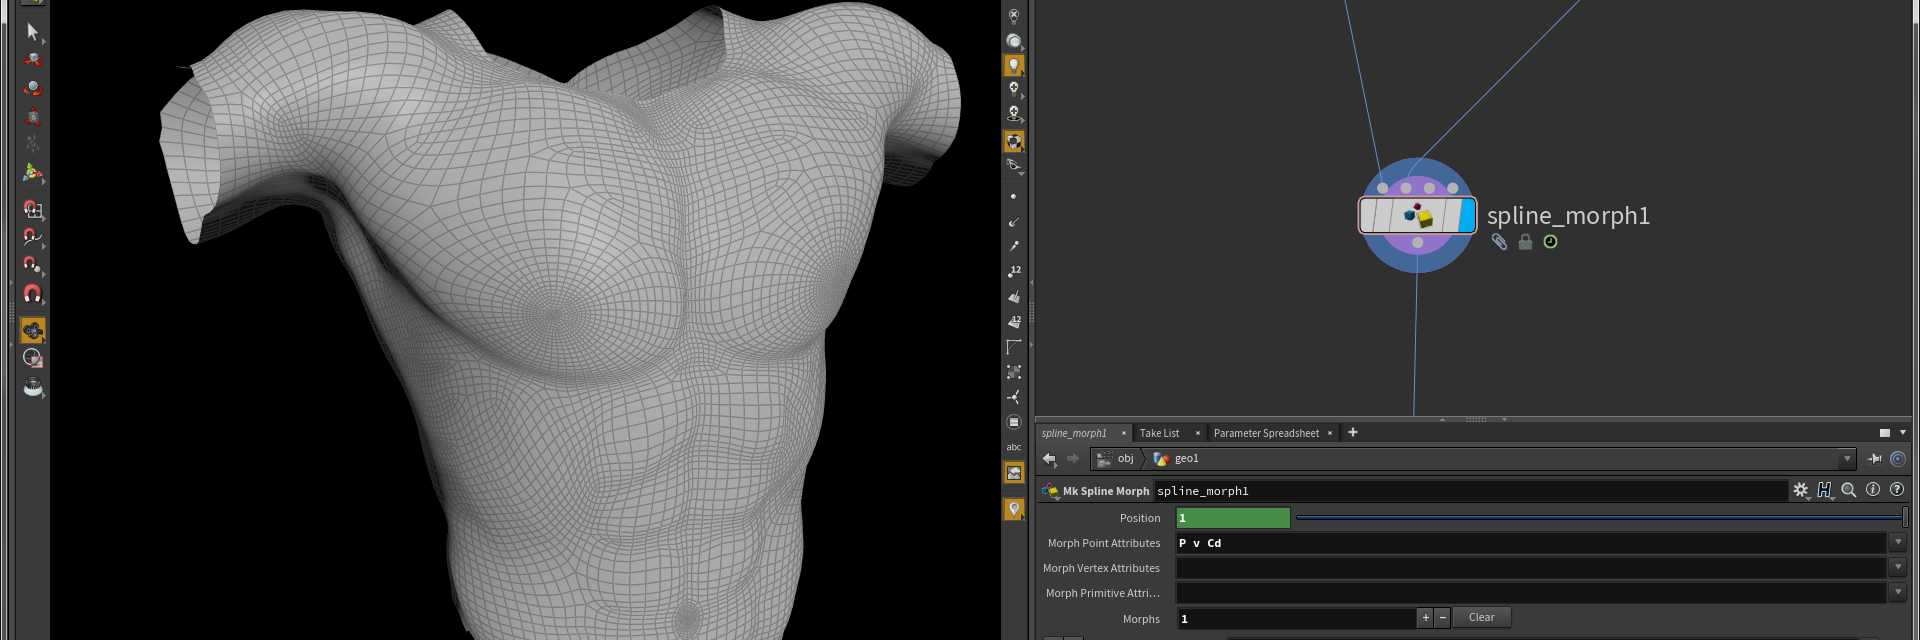 SideFx Houdini Screenshot with body model